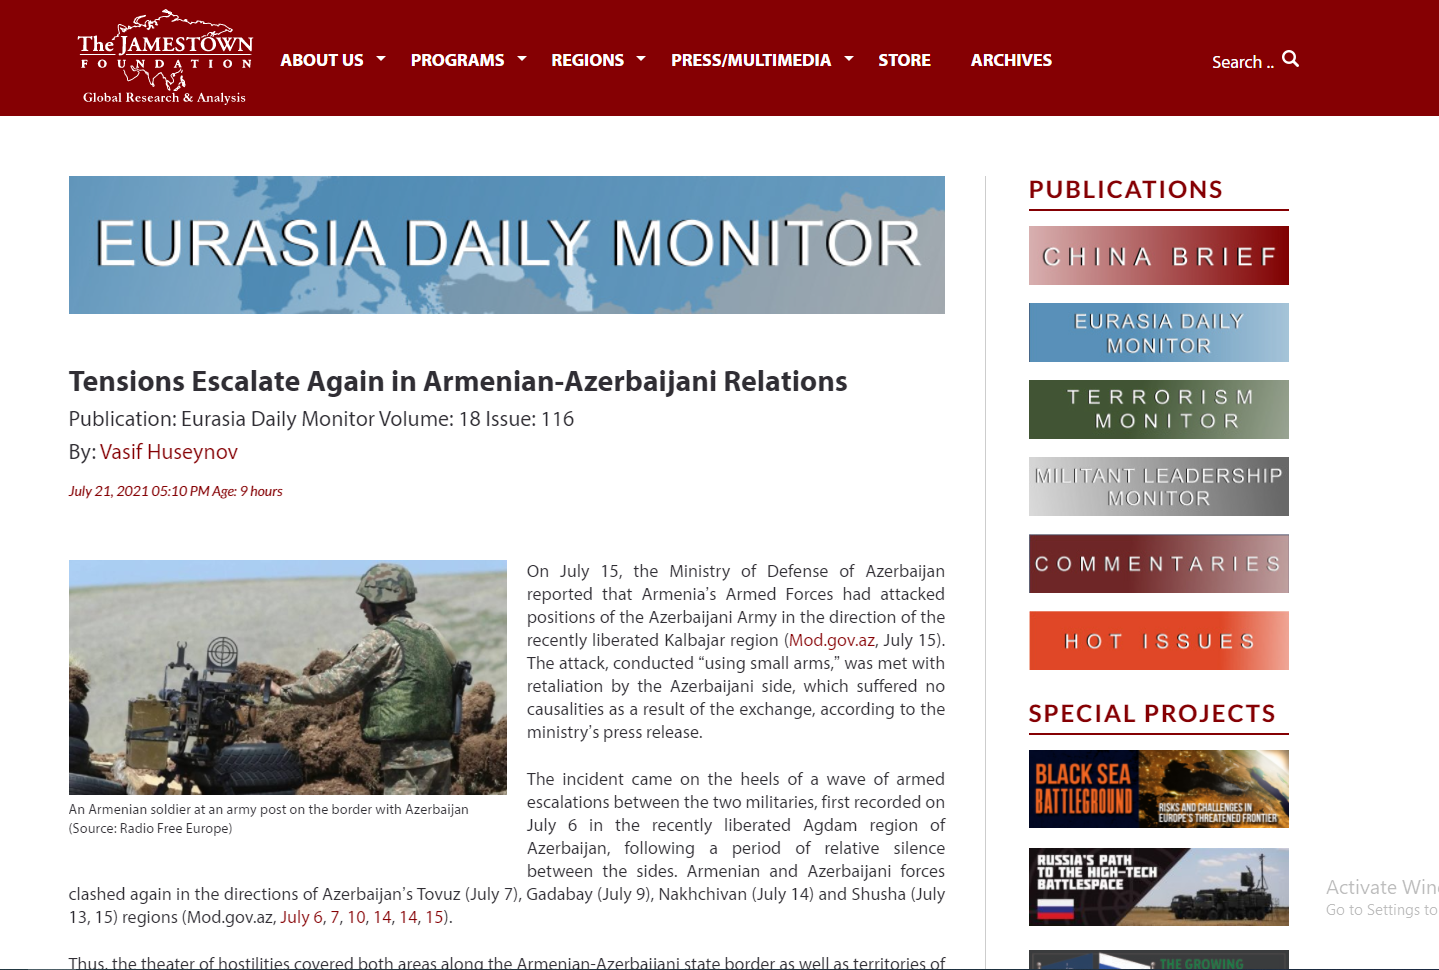 Tensions Escalate Again in Armenian-Azerbaijani Relations